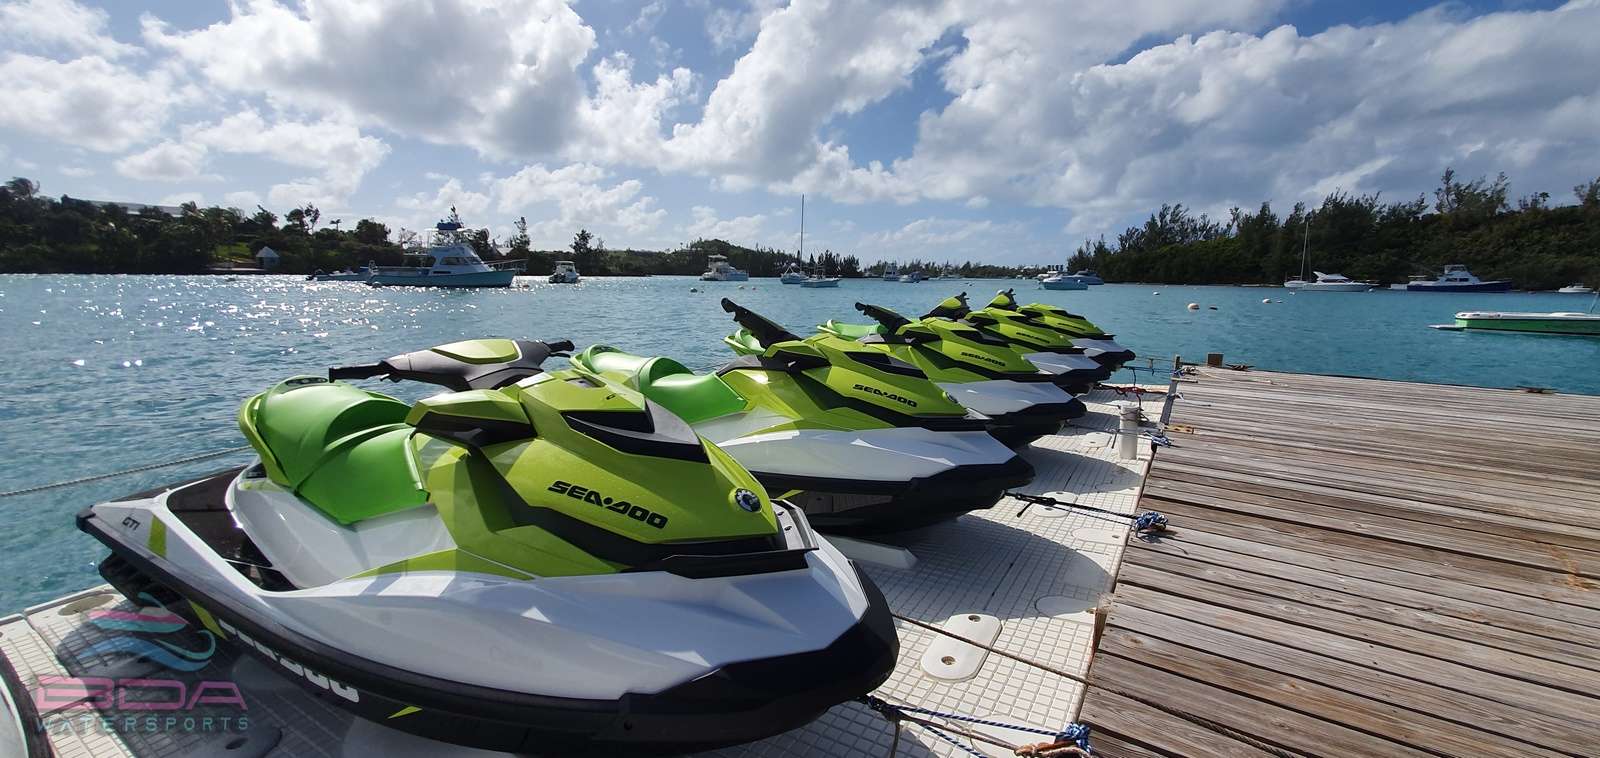 Gallery of Jet Ski Rentals in Bermuda <p>Jet Skis in Action</p>